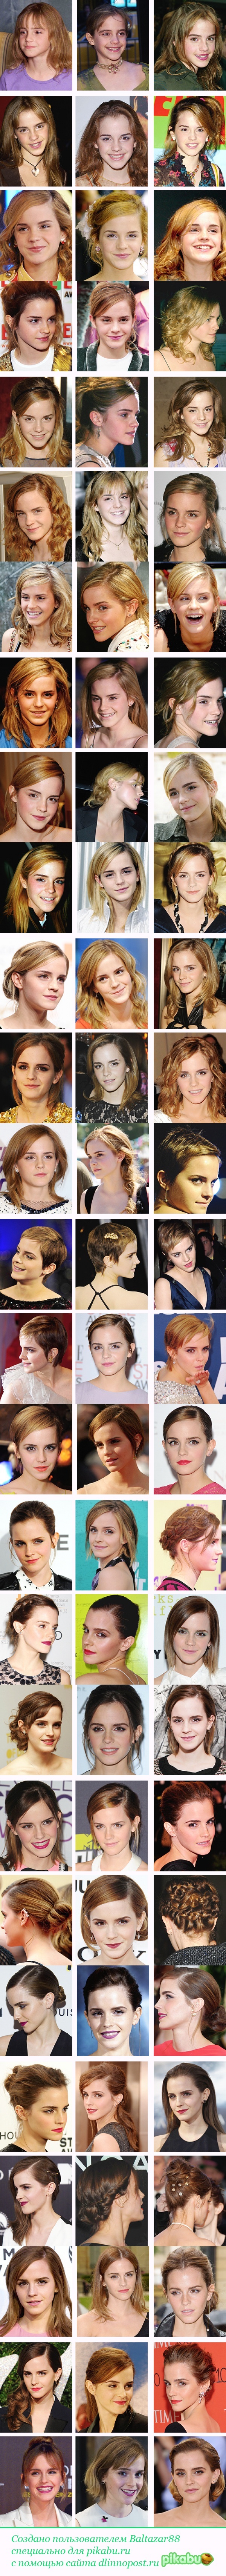 How has Emma Watson's hair changed? - Emma Watson, Прическа, Celebrities, Longpost